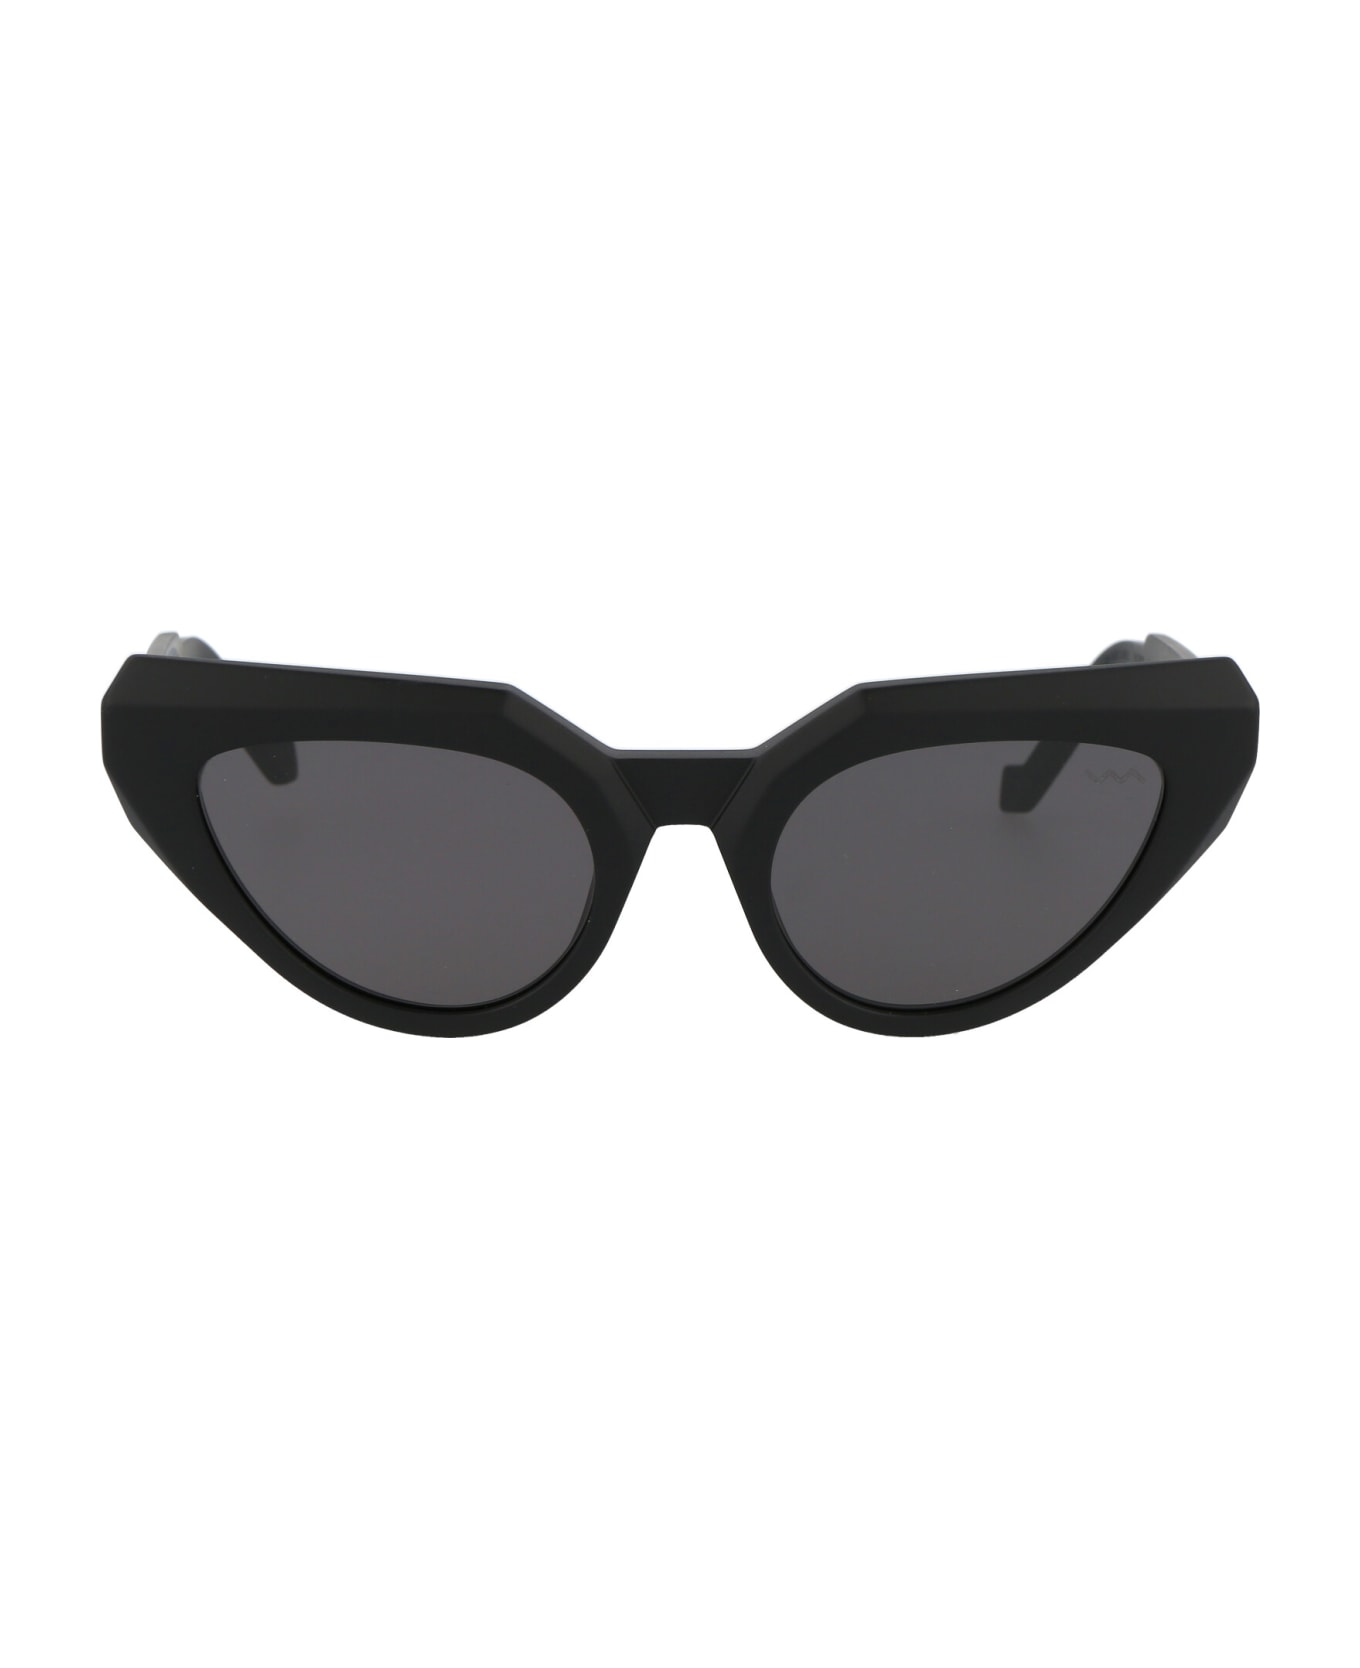 VAVA Bl0028 Sunglasses - MATTE BLACK|SILVER FLEX HINGES|BLACK LENSES